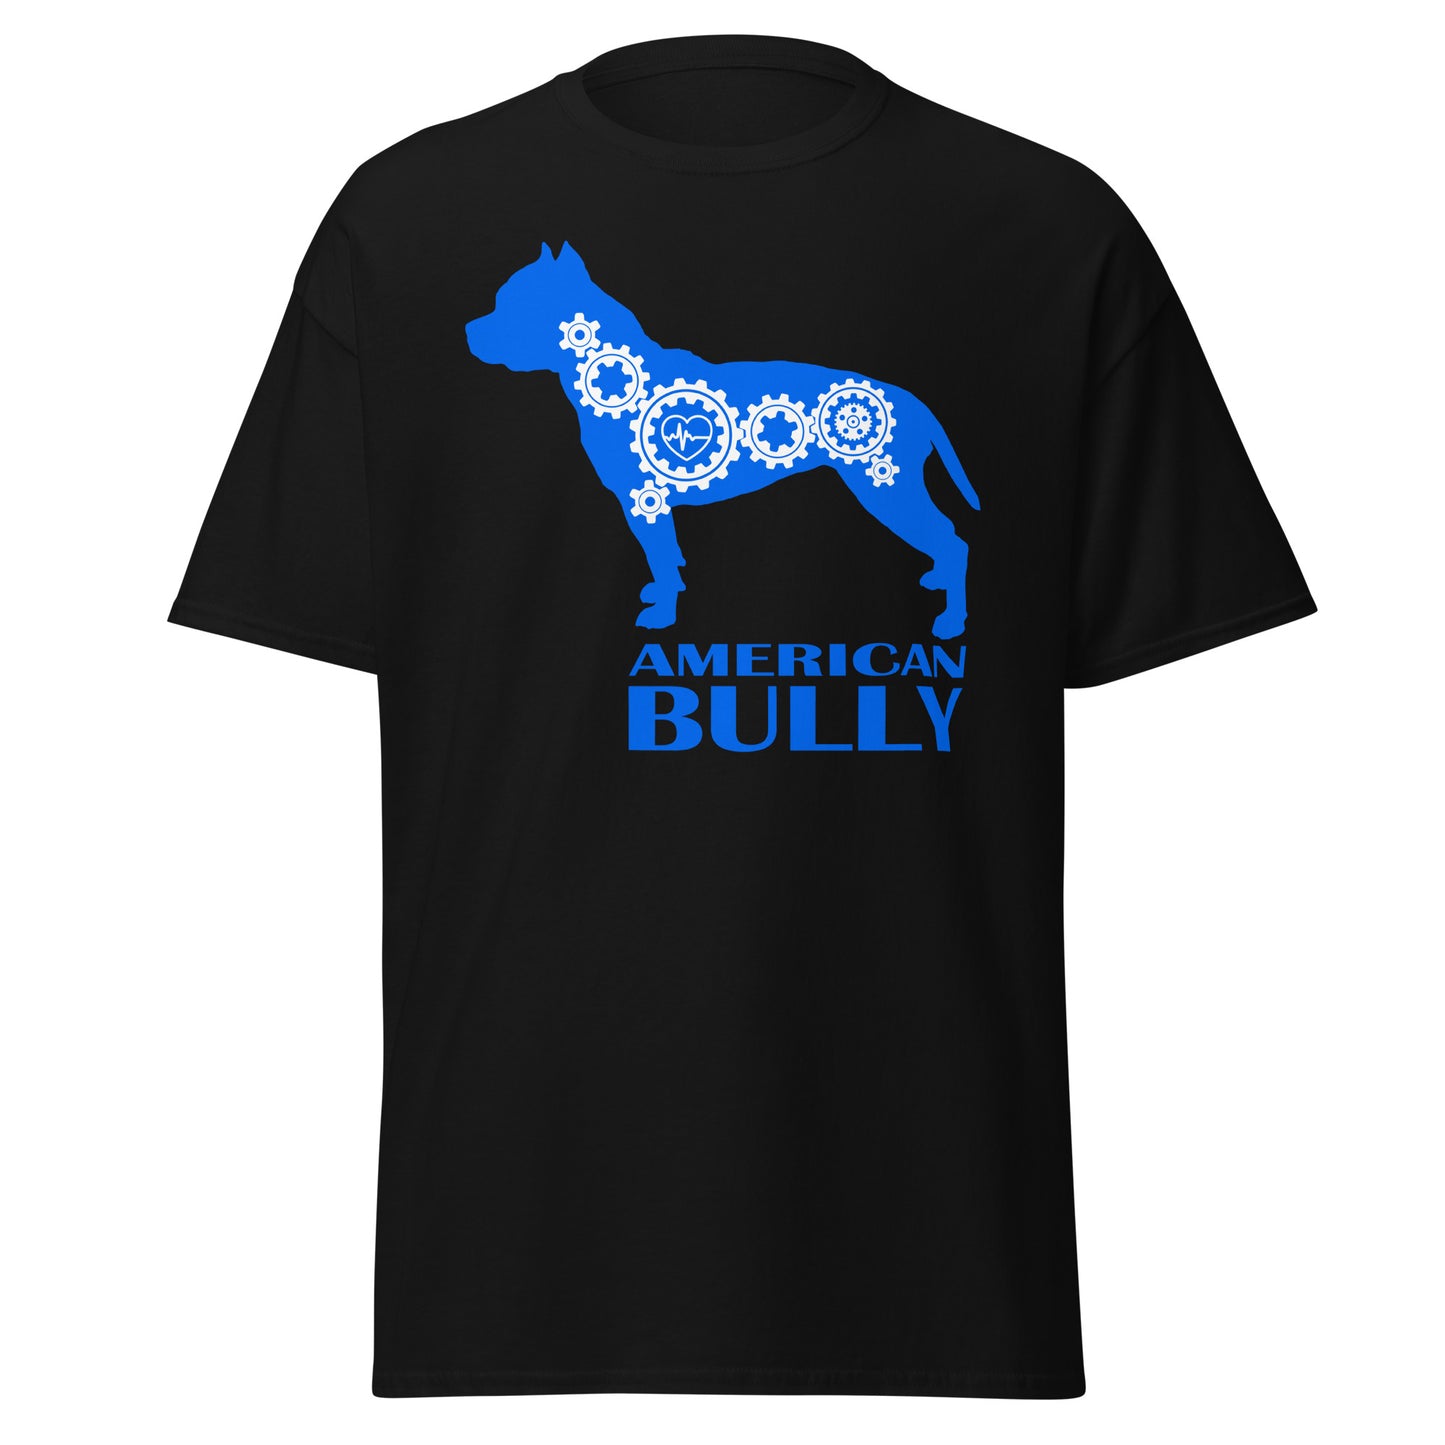 American Bully Bionic men’s black t-shirt by Dog Artistry.